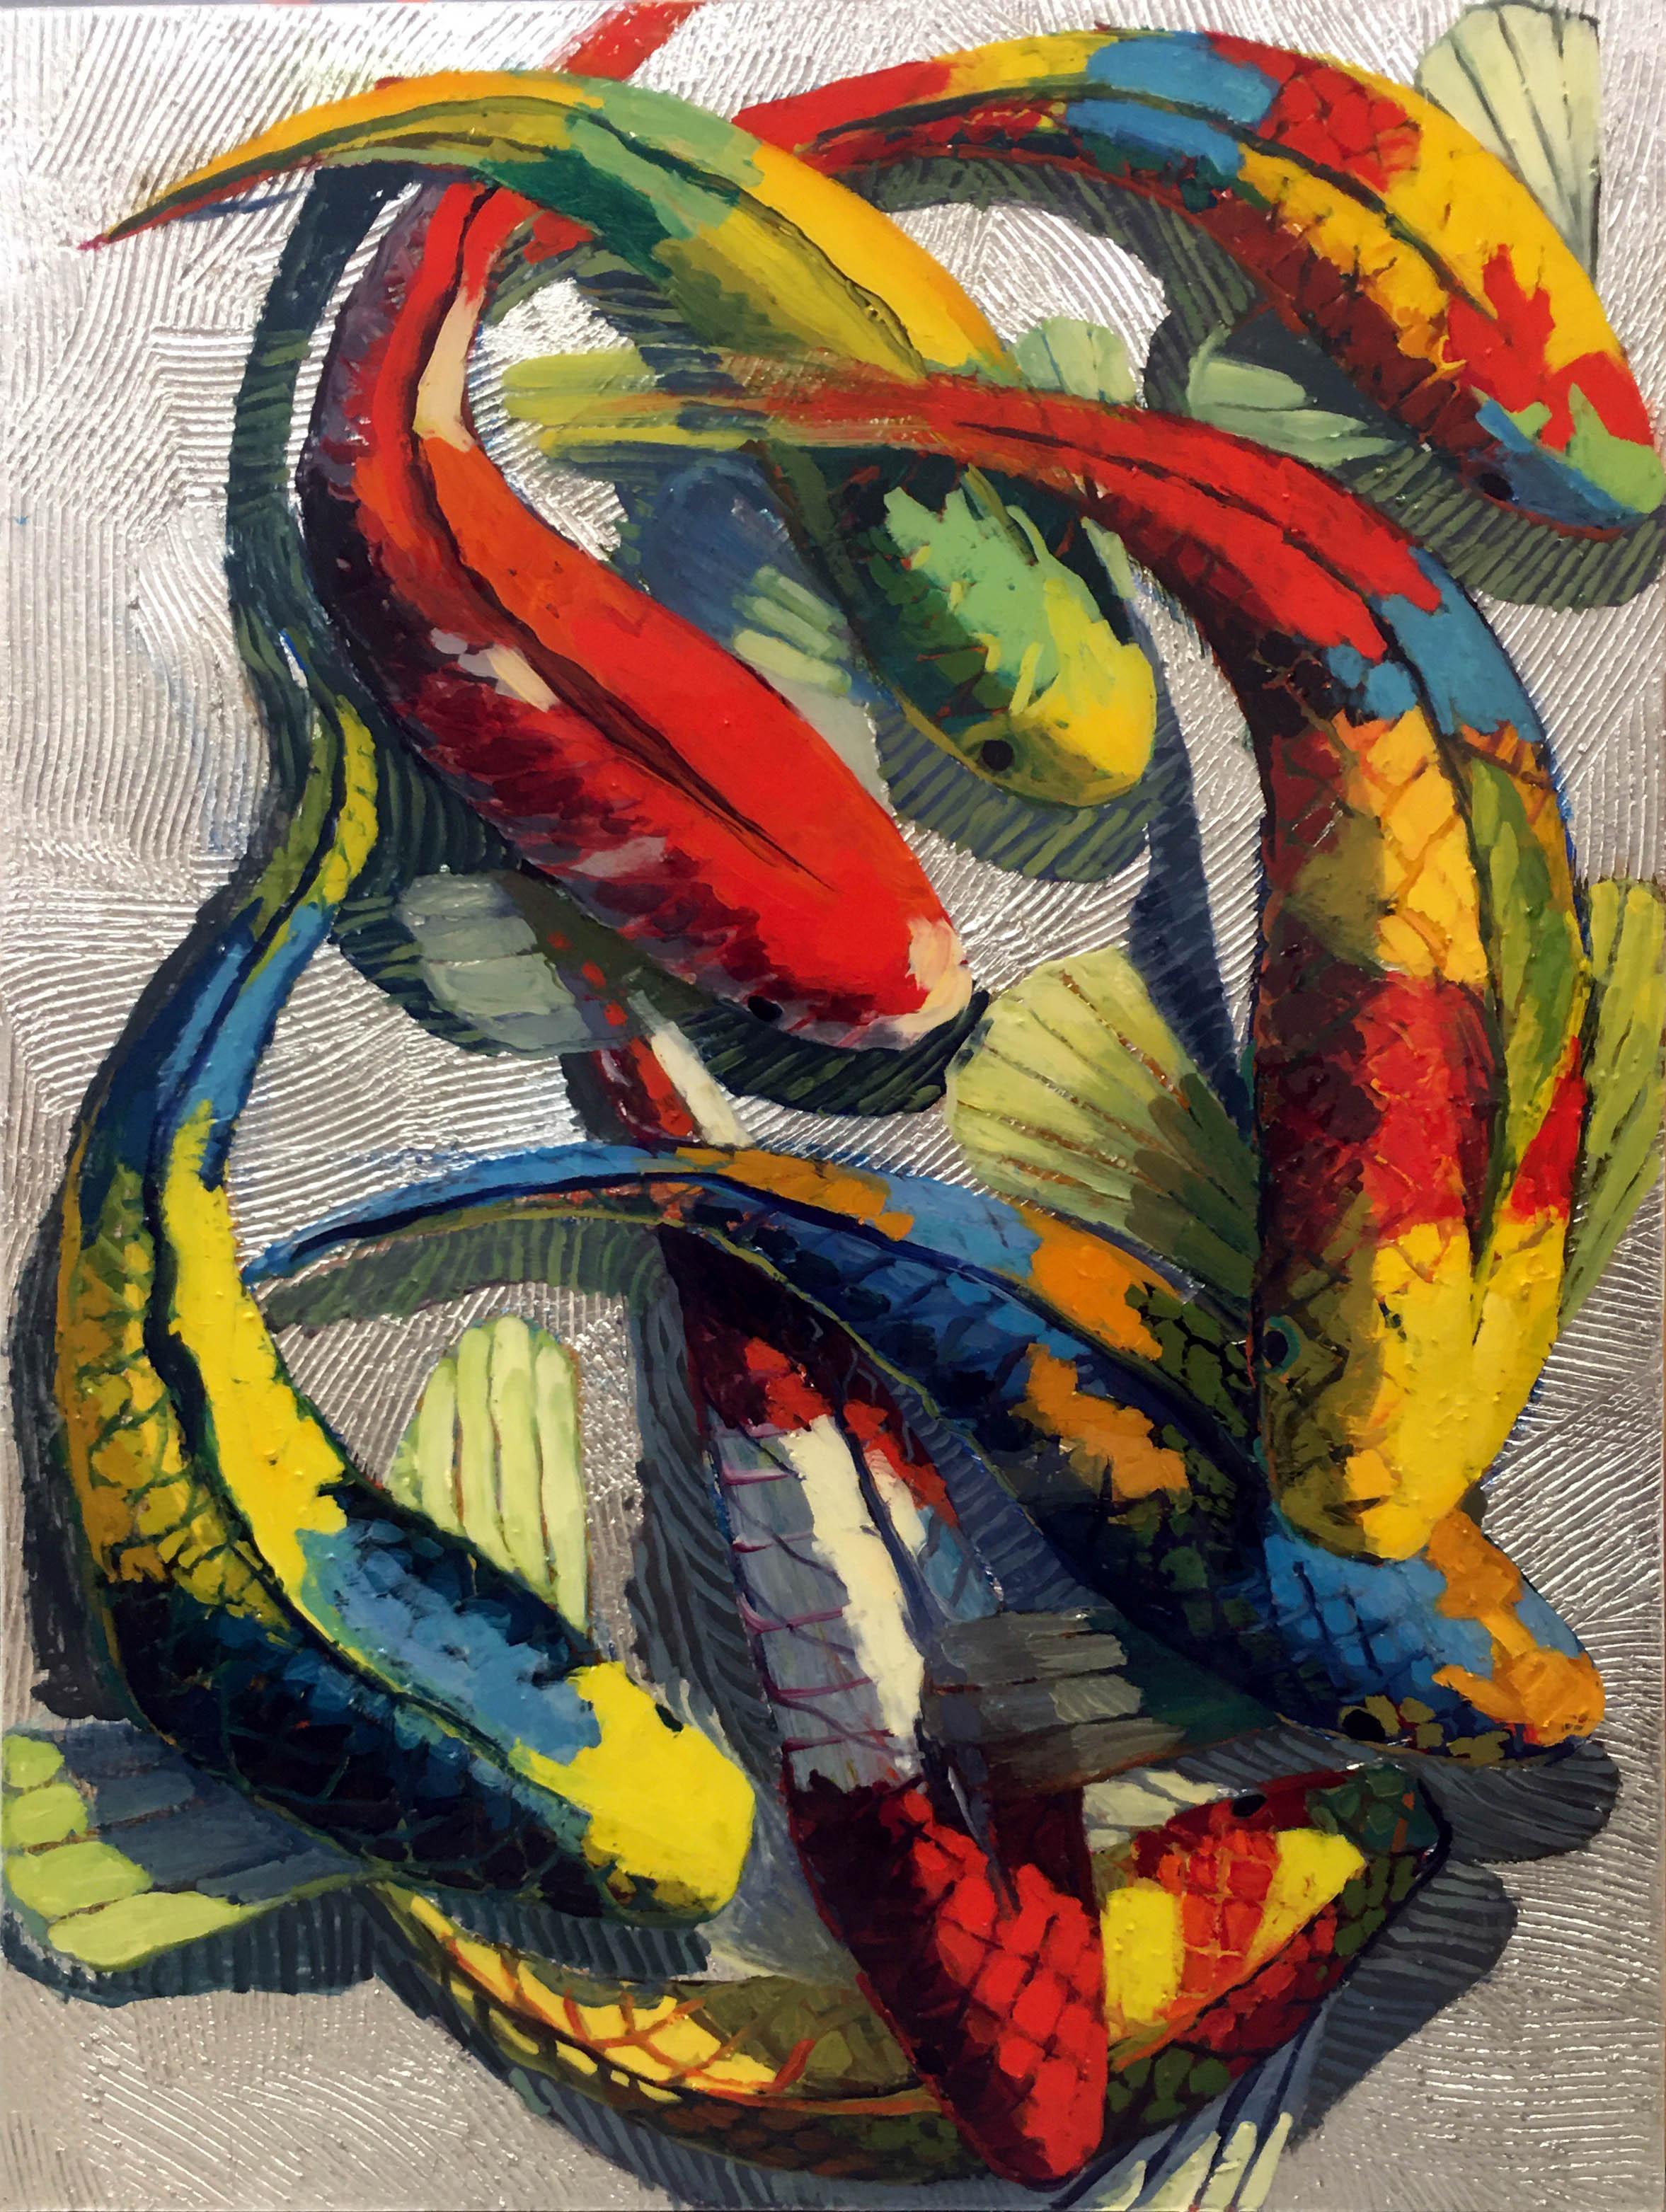 Danse serpentine - Koi bleu et jaune sur argent 48 x 36 - Mixed Media Art de Frank Hyder